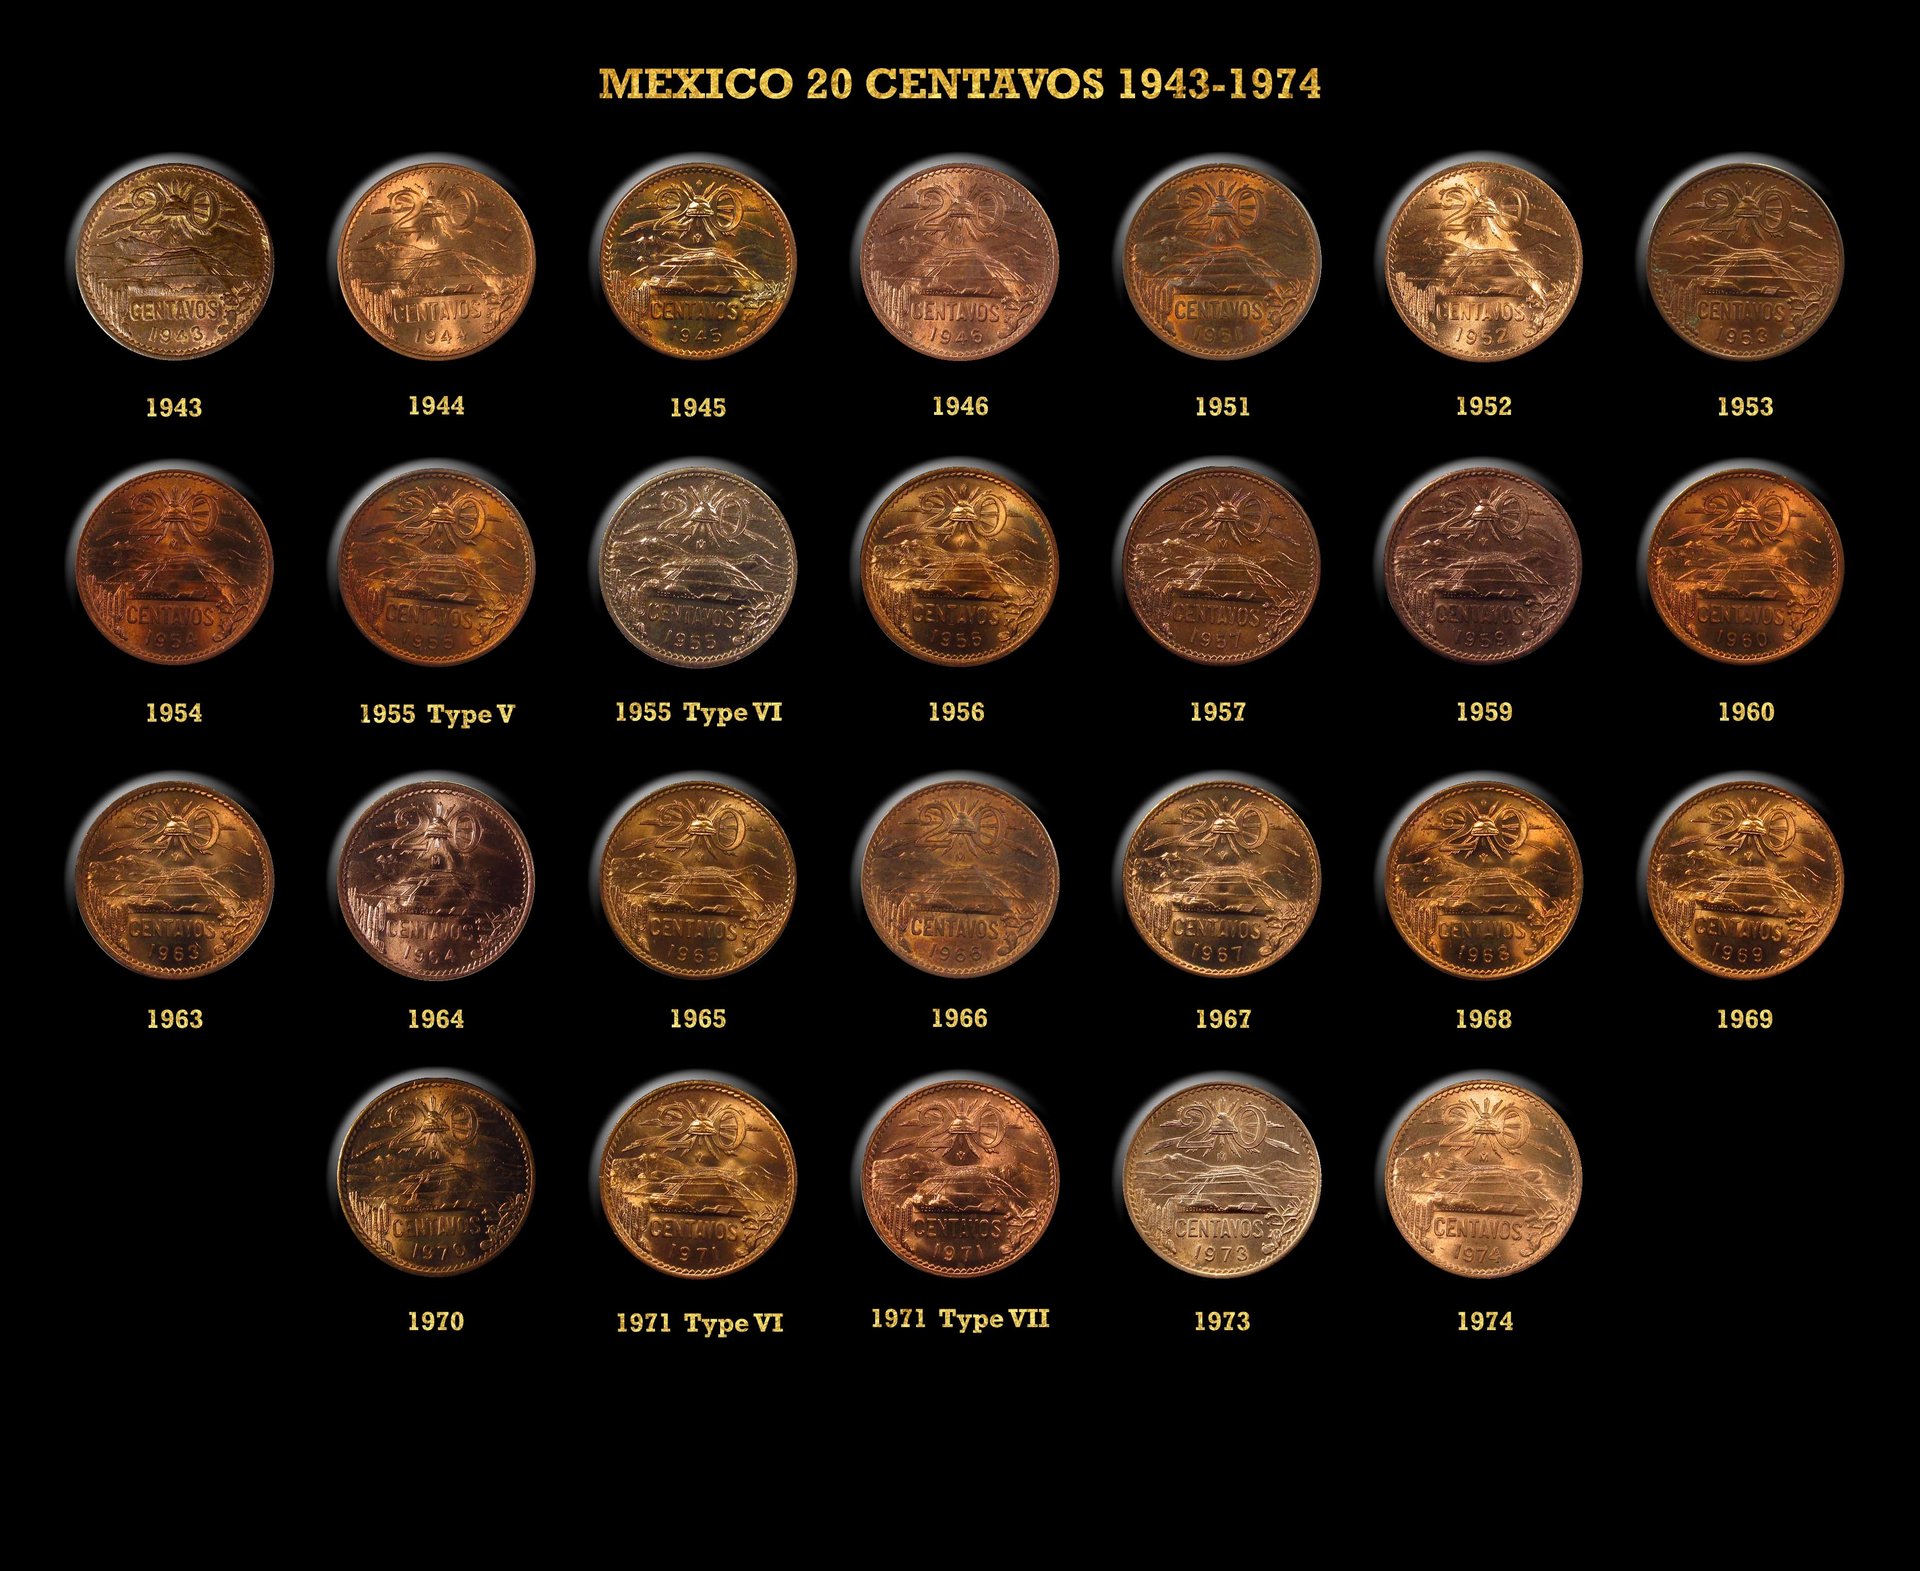 mexico 20 centavos plaque solid black and gold.jpg